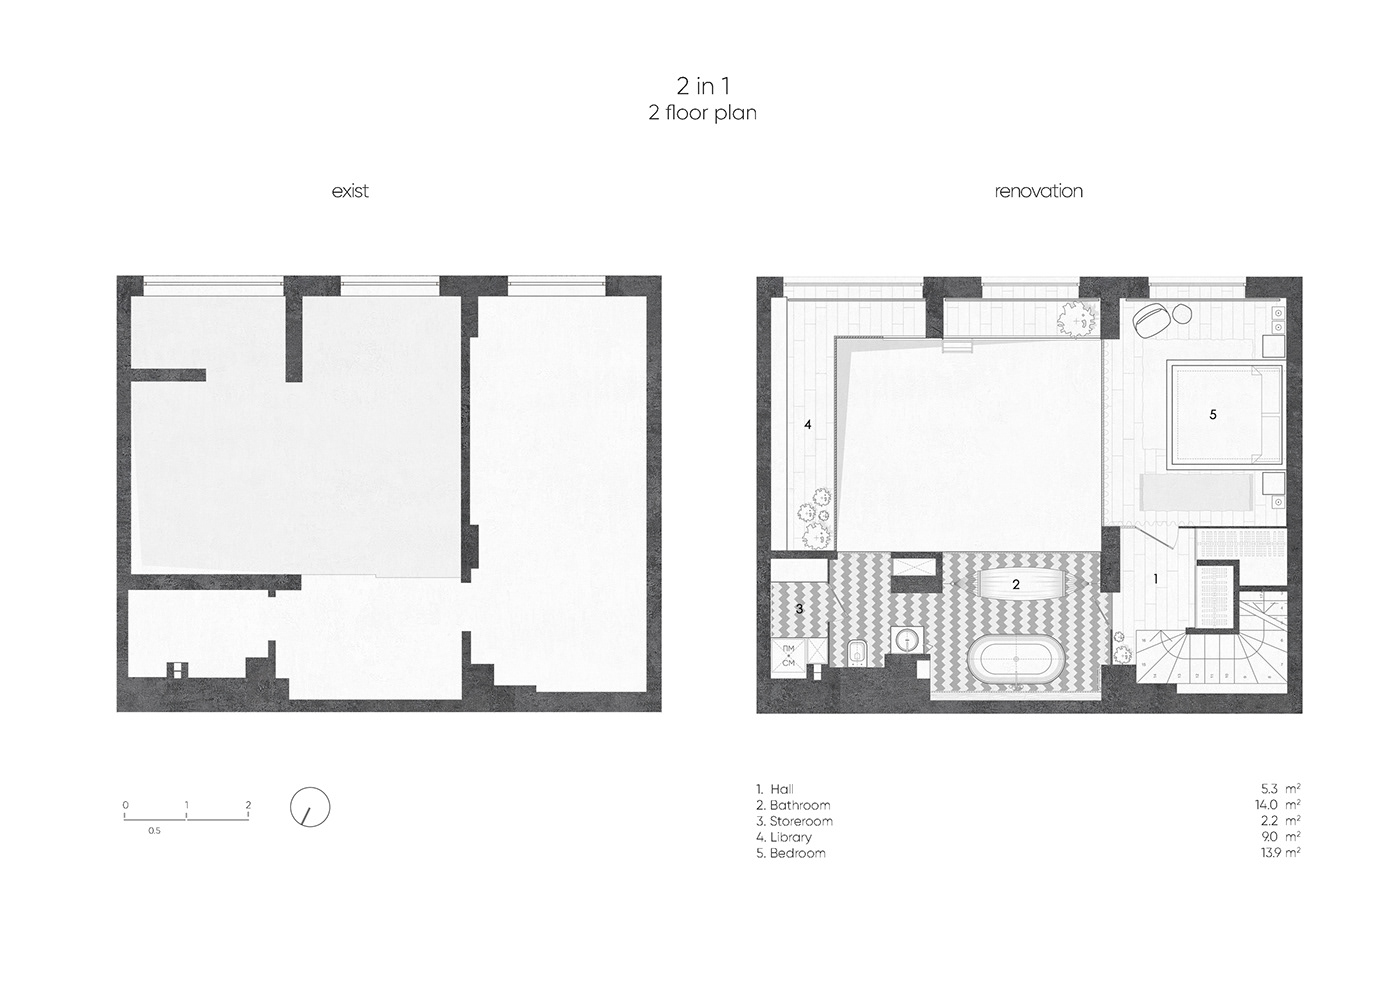 apartment ArchDaily design duplex flat Interior minimal oksanashumelda realization top